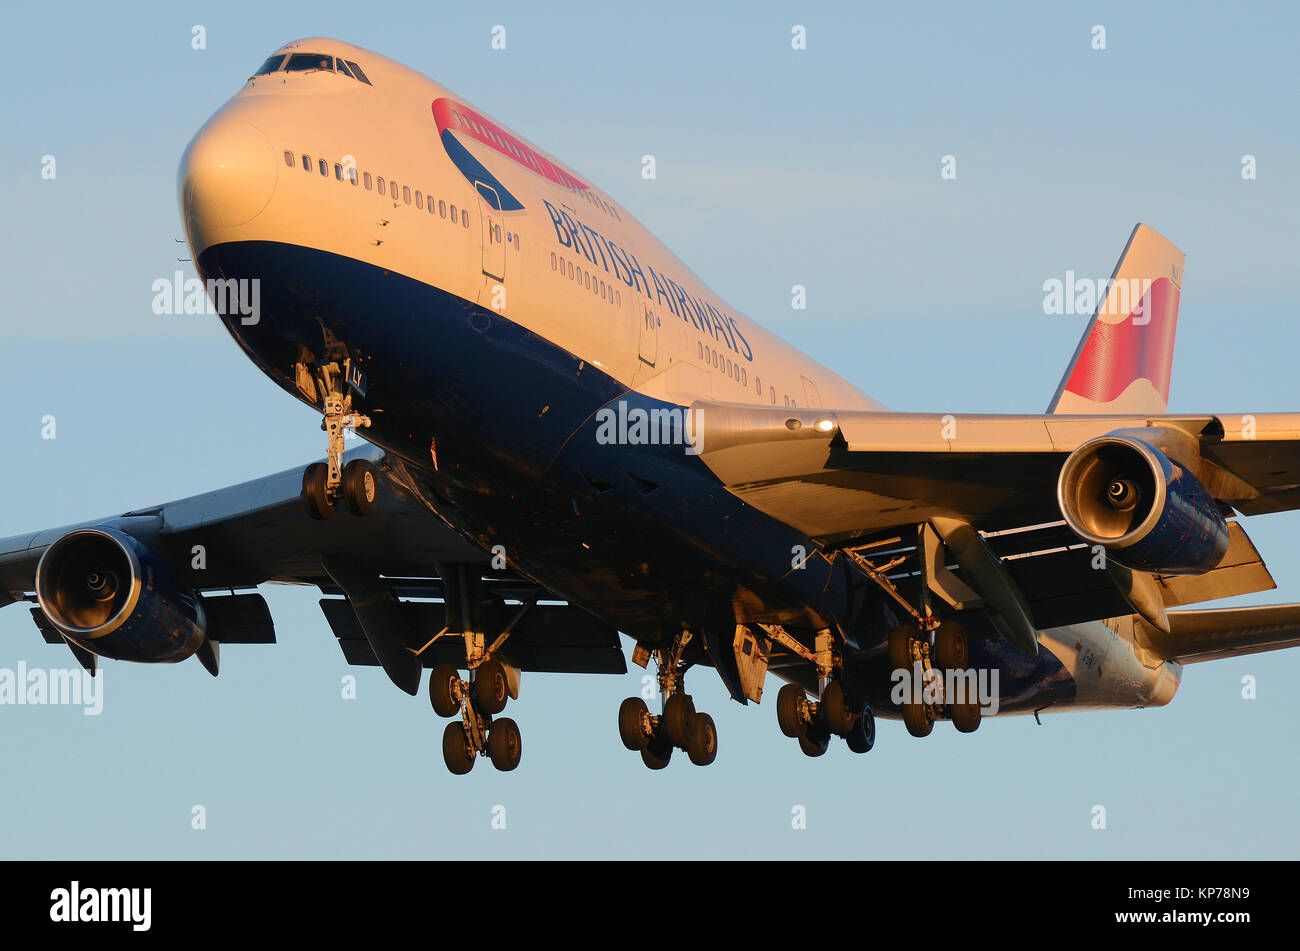 British Airways Boeing 747 -400 Jumbo Jet plane G-BNLY  landing at London Heathrow Airport, UK Stock Photo